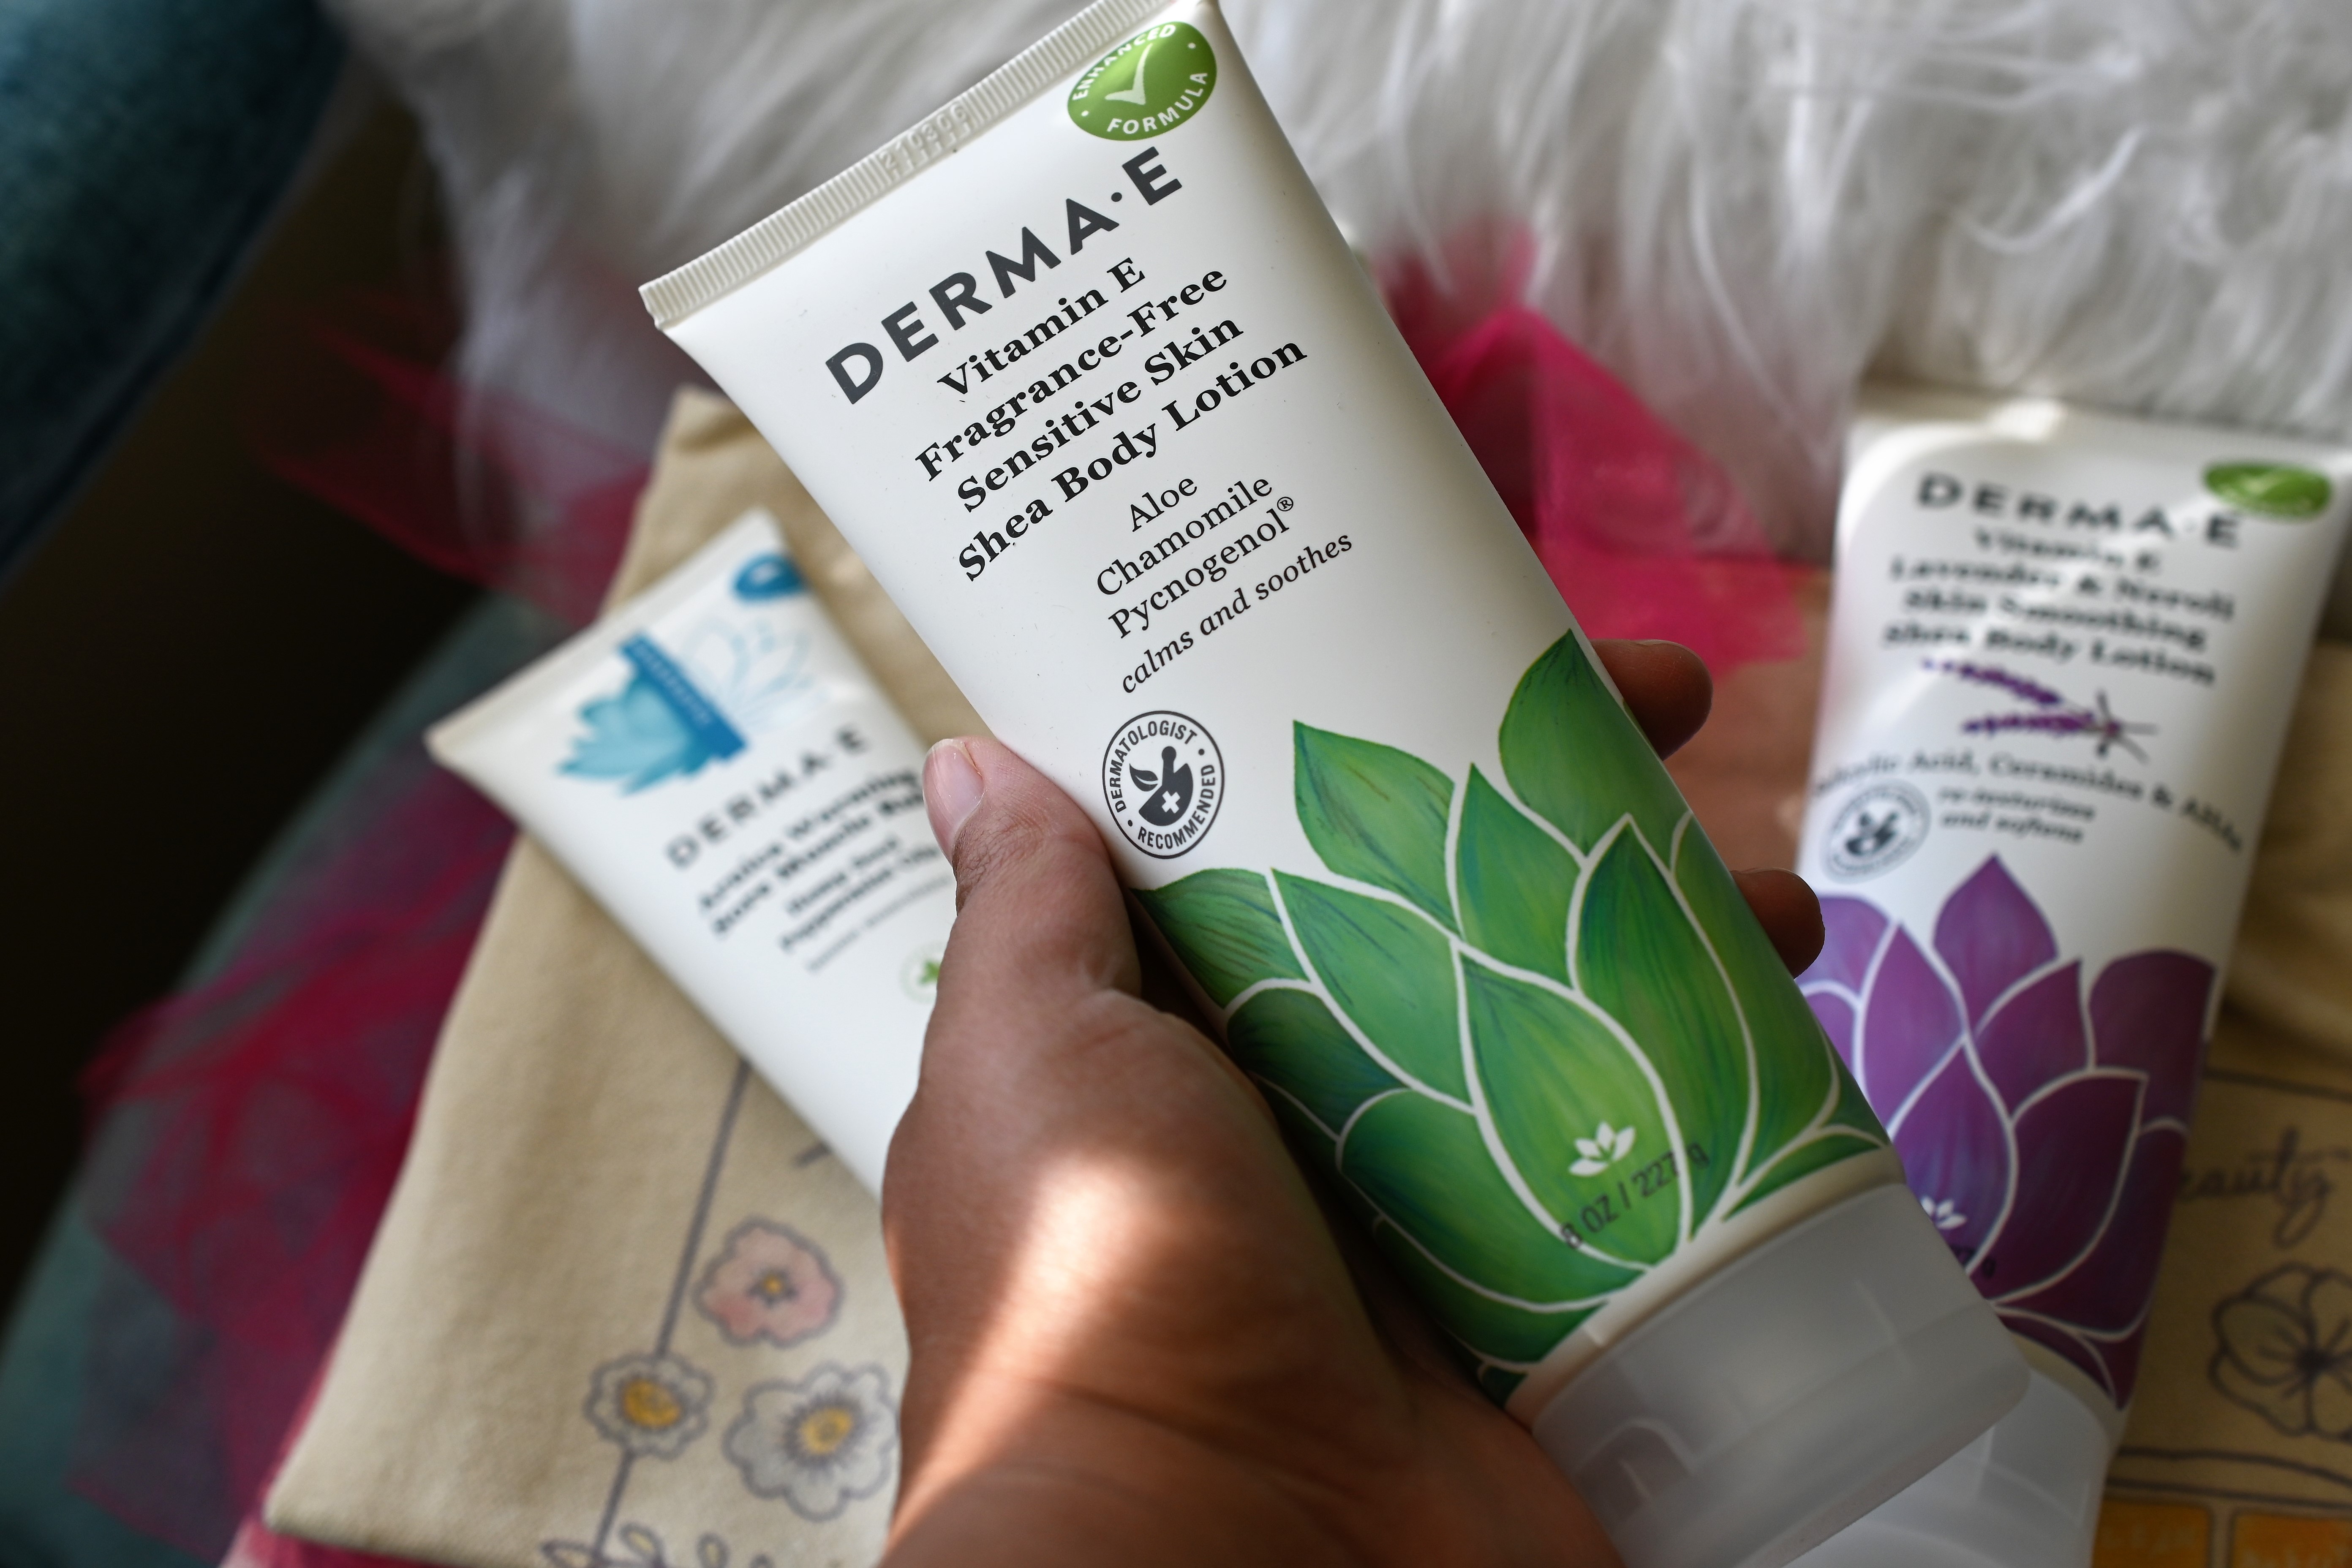 DERMA-E Vitamin E Fragrance-Free Sensitive Skin Shea Body Lotion